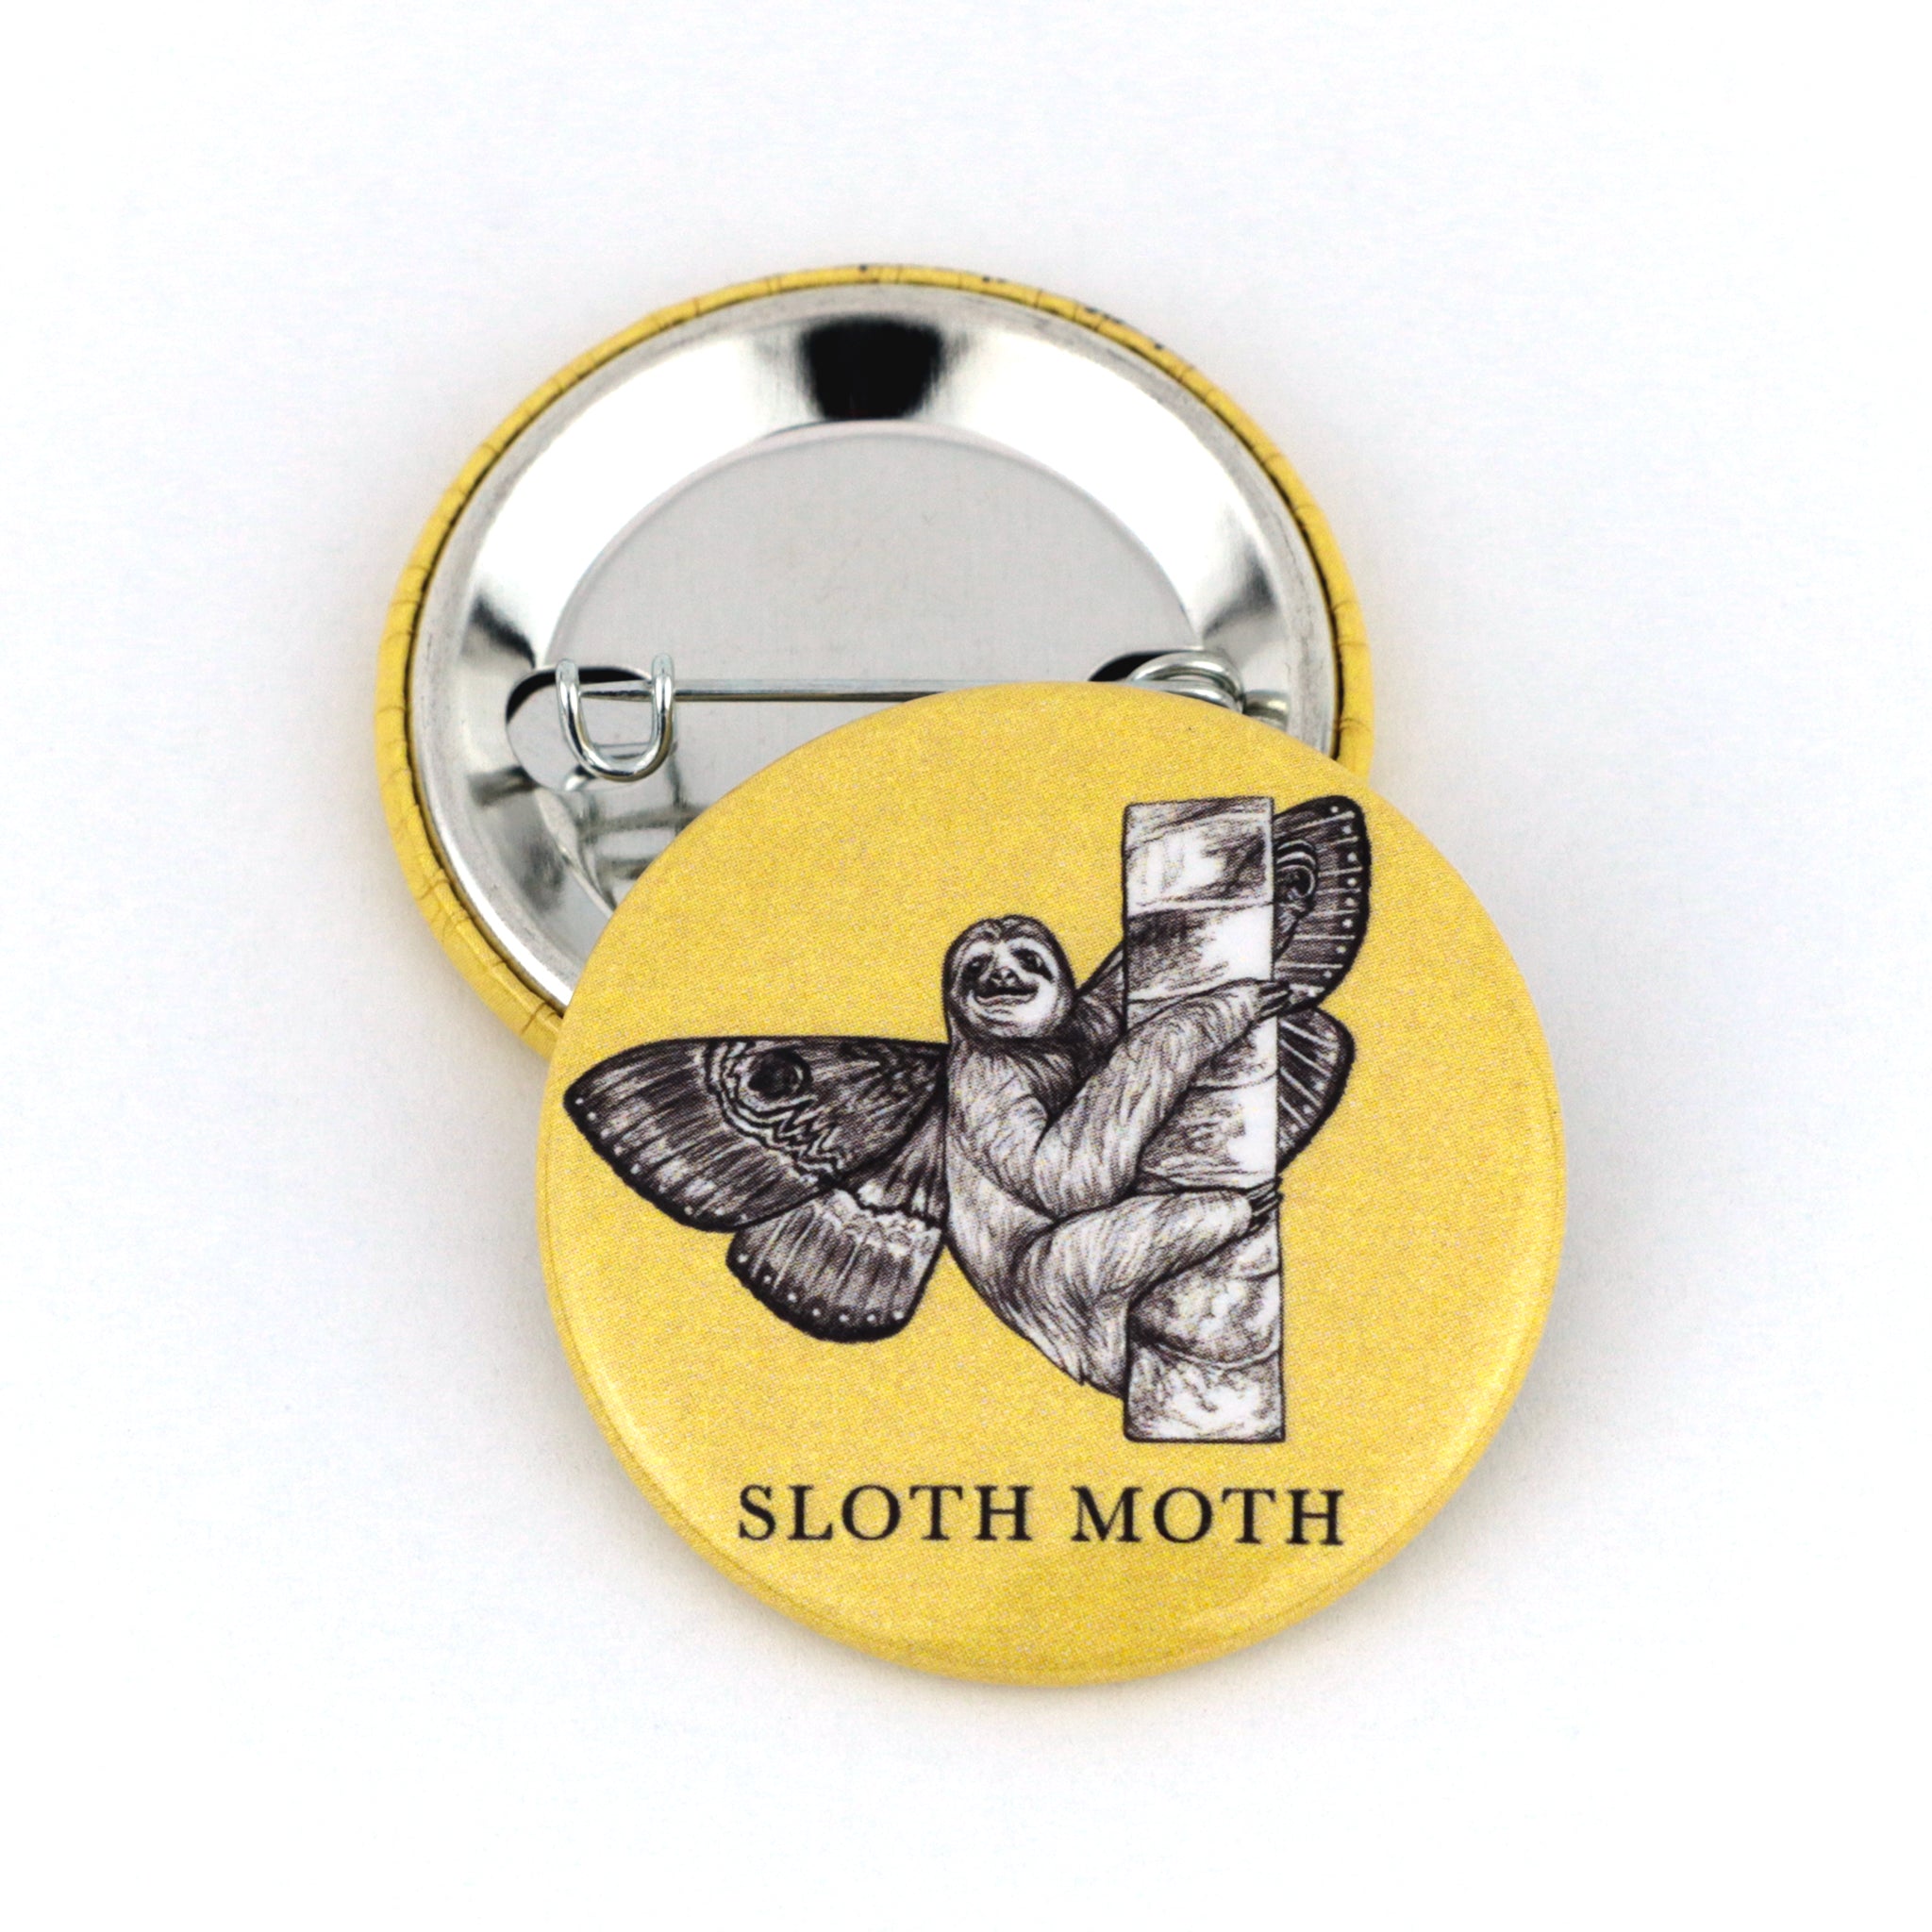 Sloth Moth | Sloth + Moth Hybrid Animal | 1.5" Pinback Button